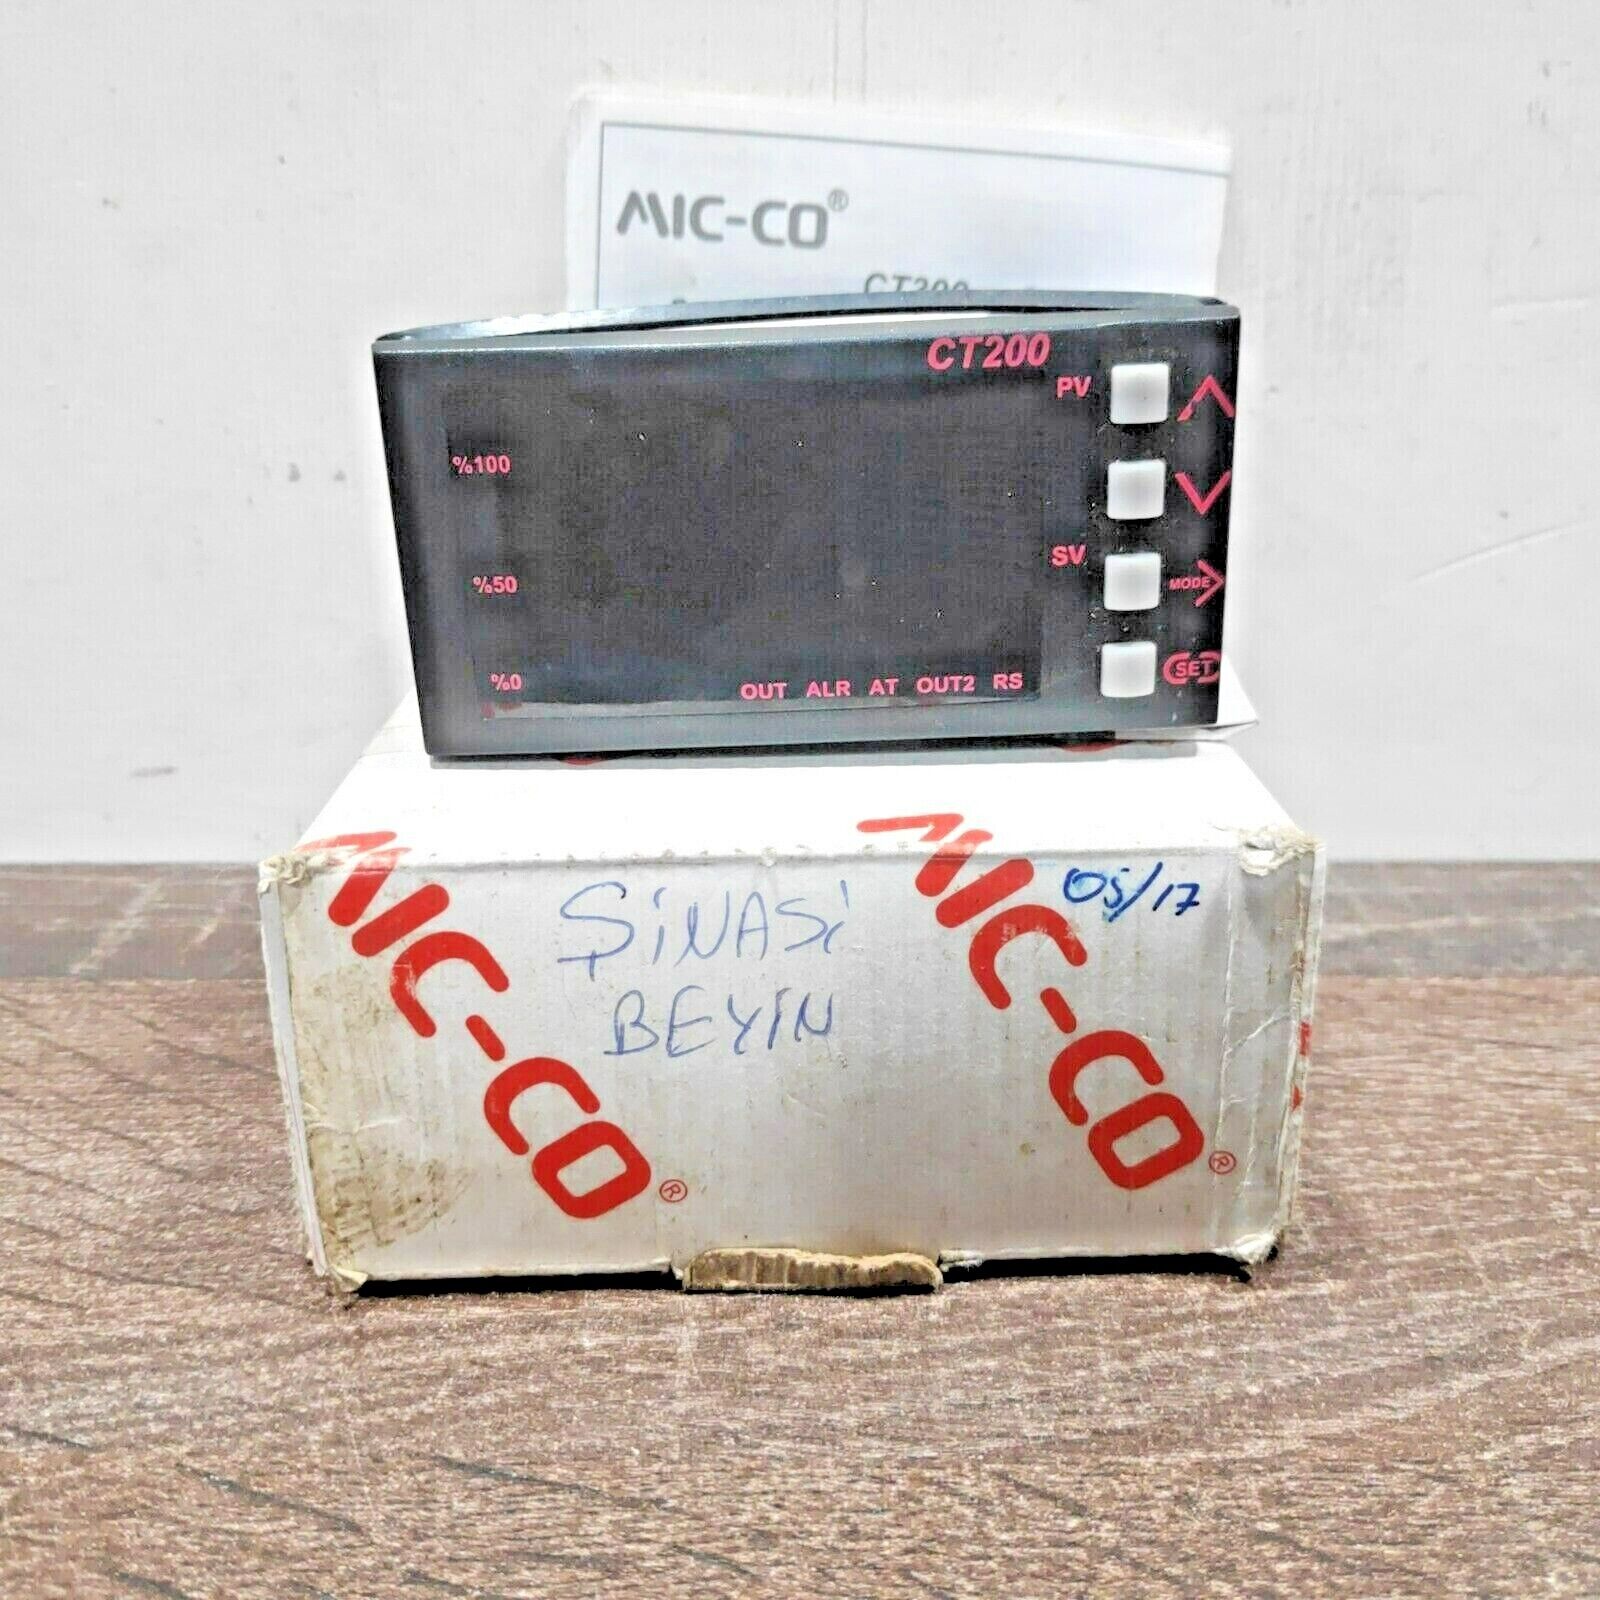 MIC-CO CT200